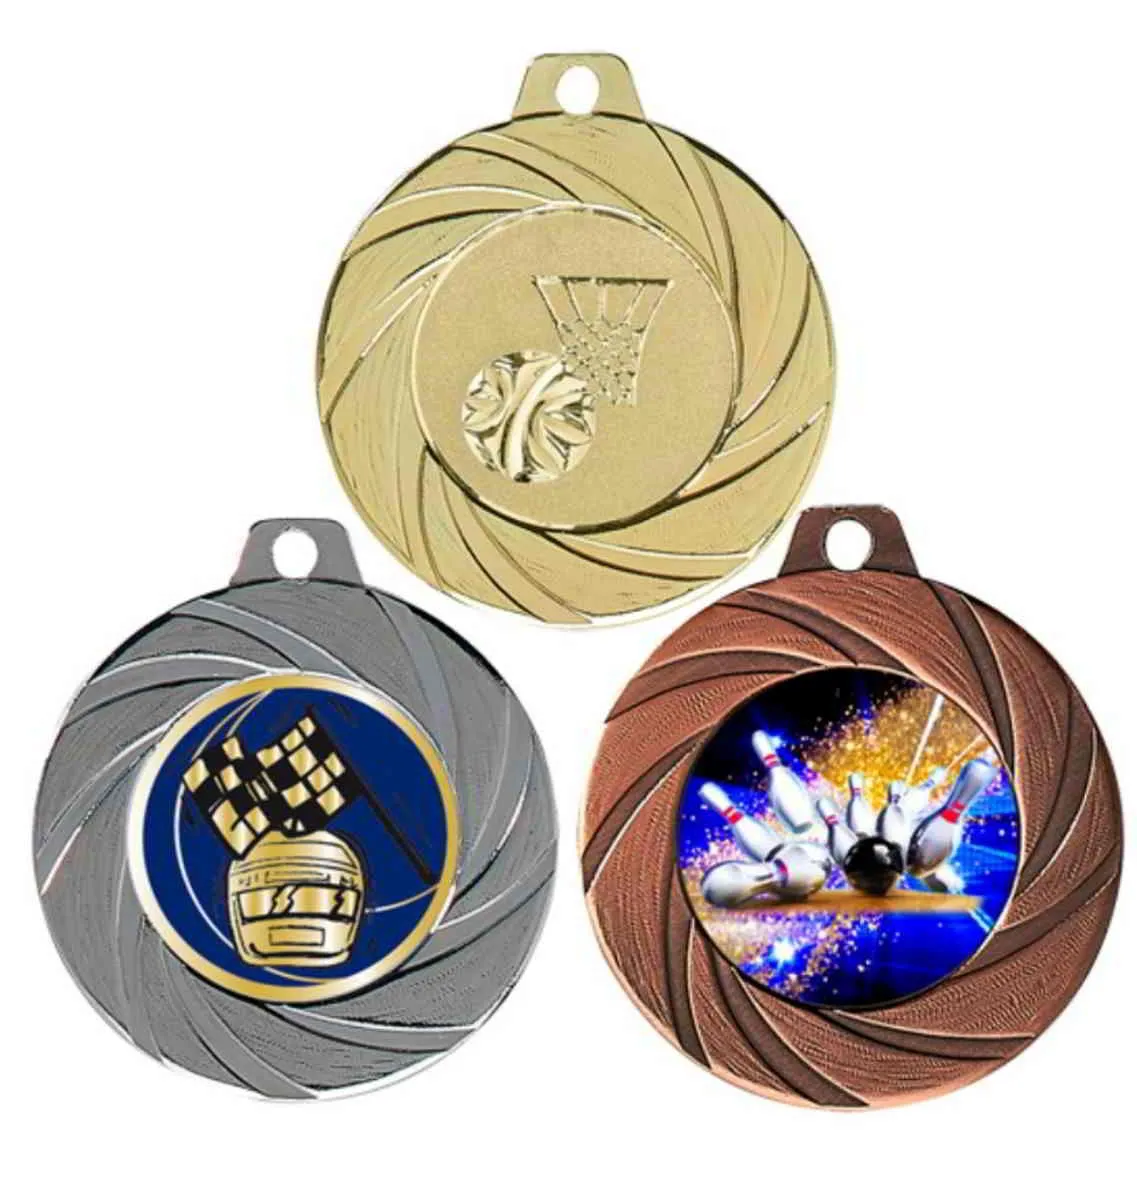 Medalje i guld, sølv, bronze ca. 4 cm